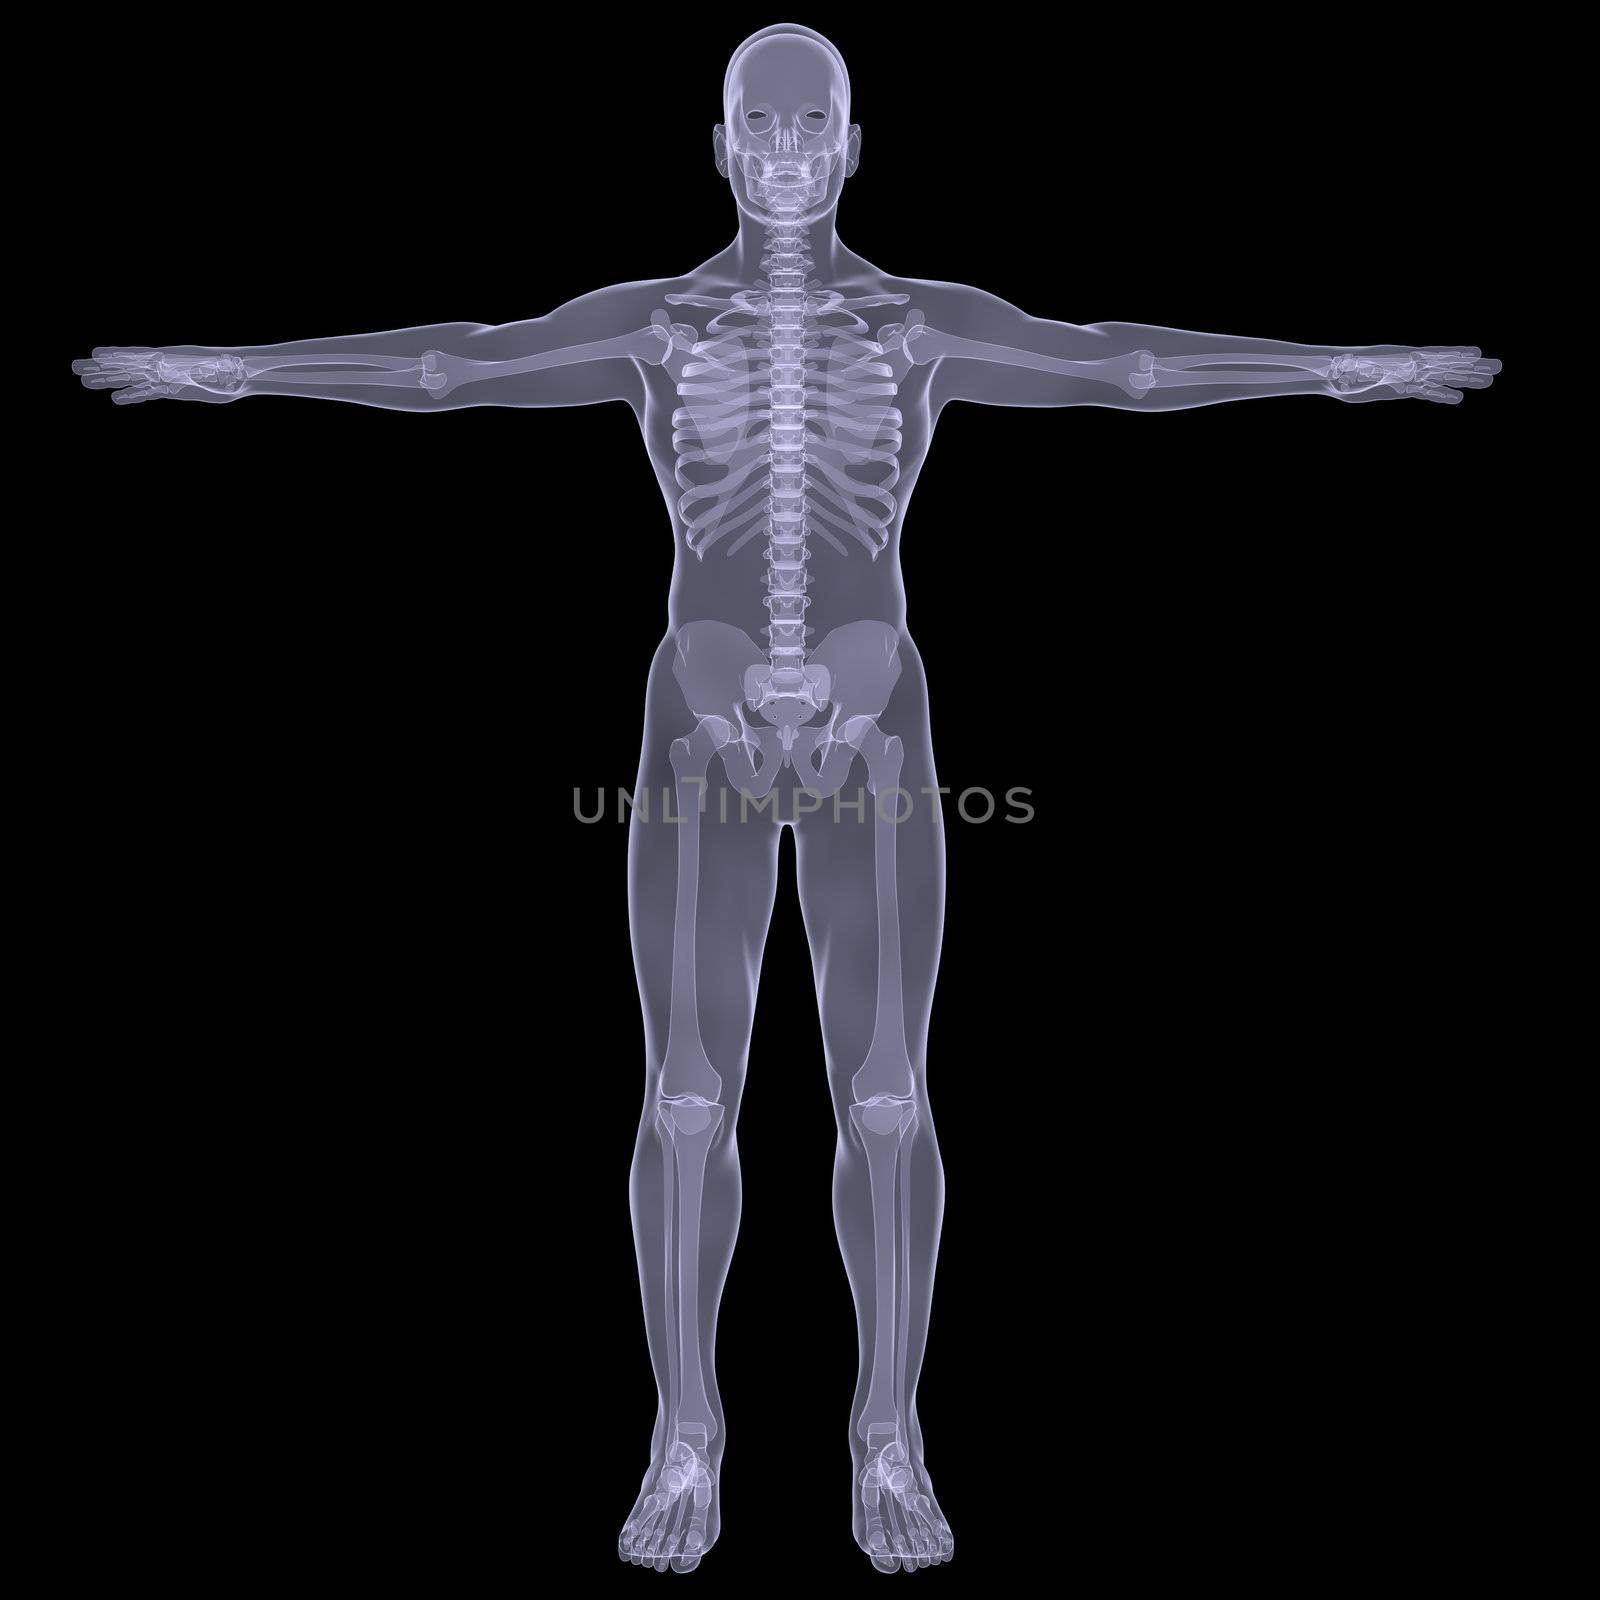 X-ray of man by cherezoff